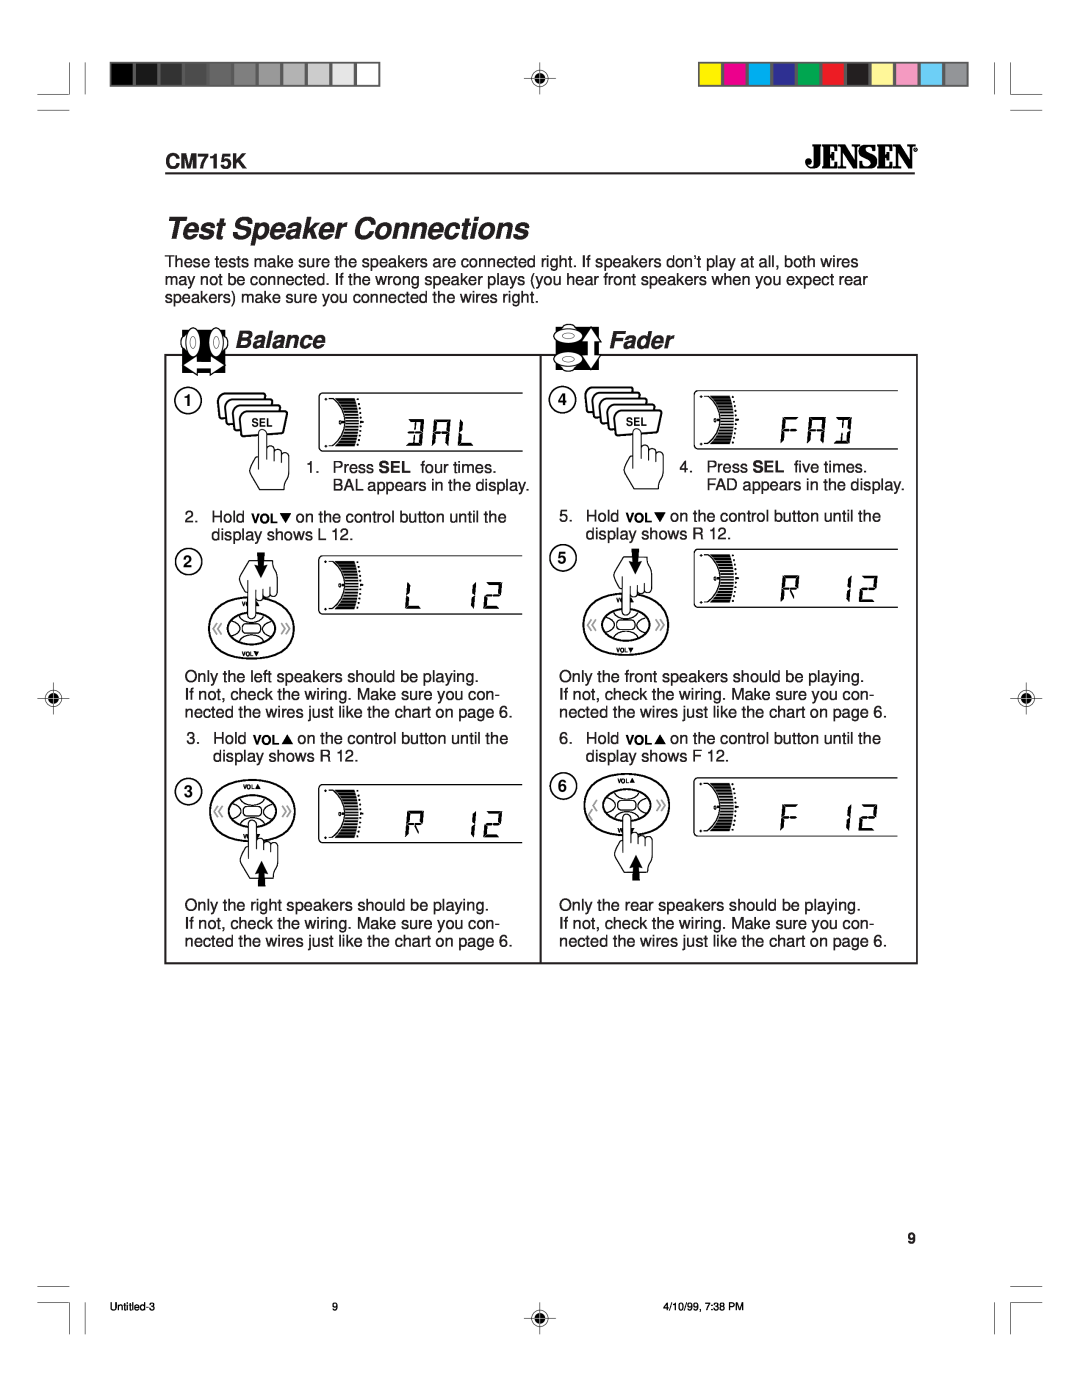 Jensen CM715K specifications Test Speaker Connections, Balance, Fader 